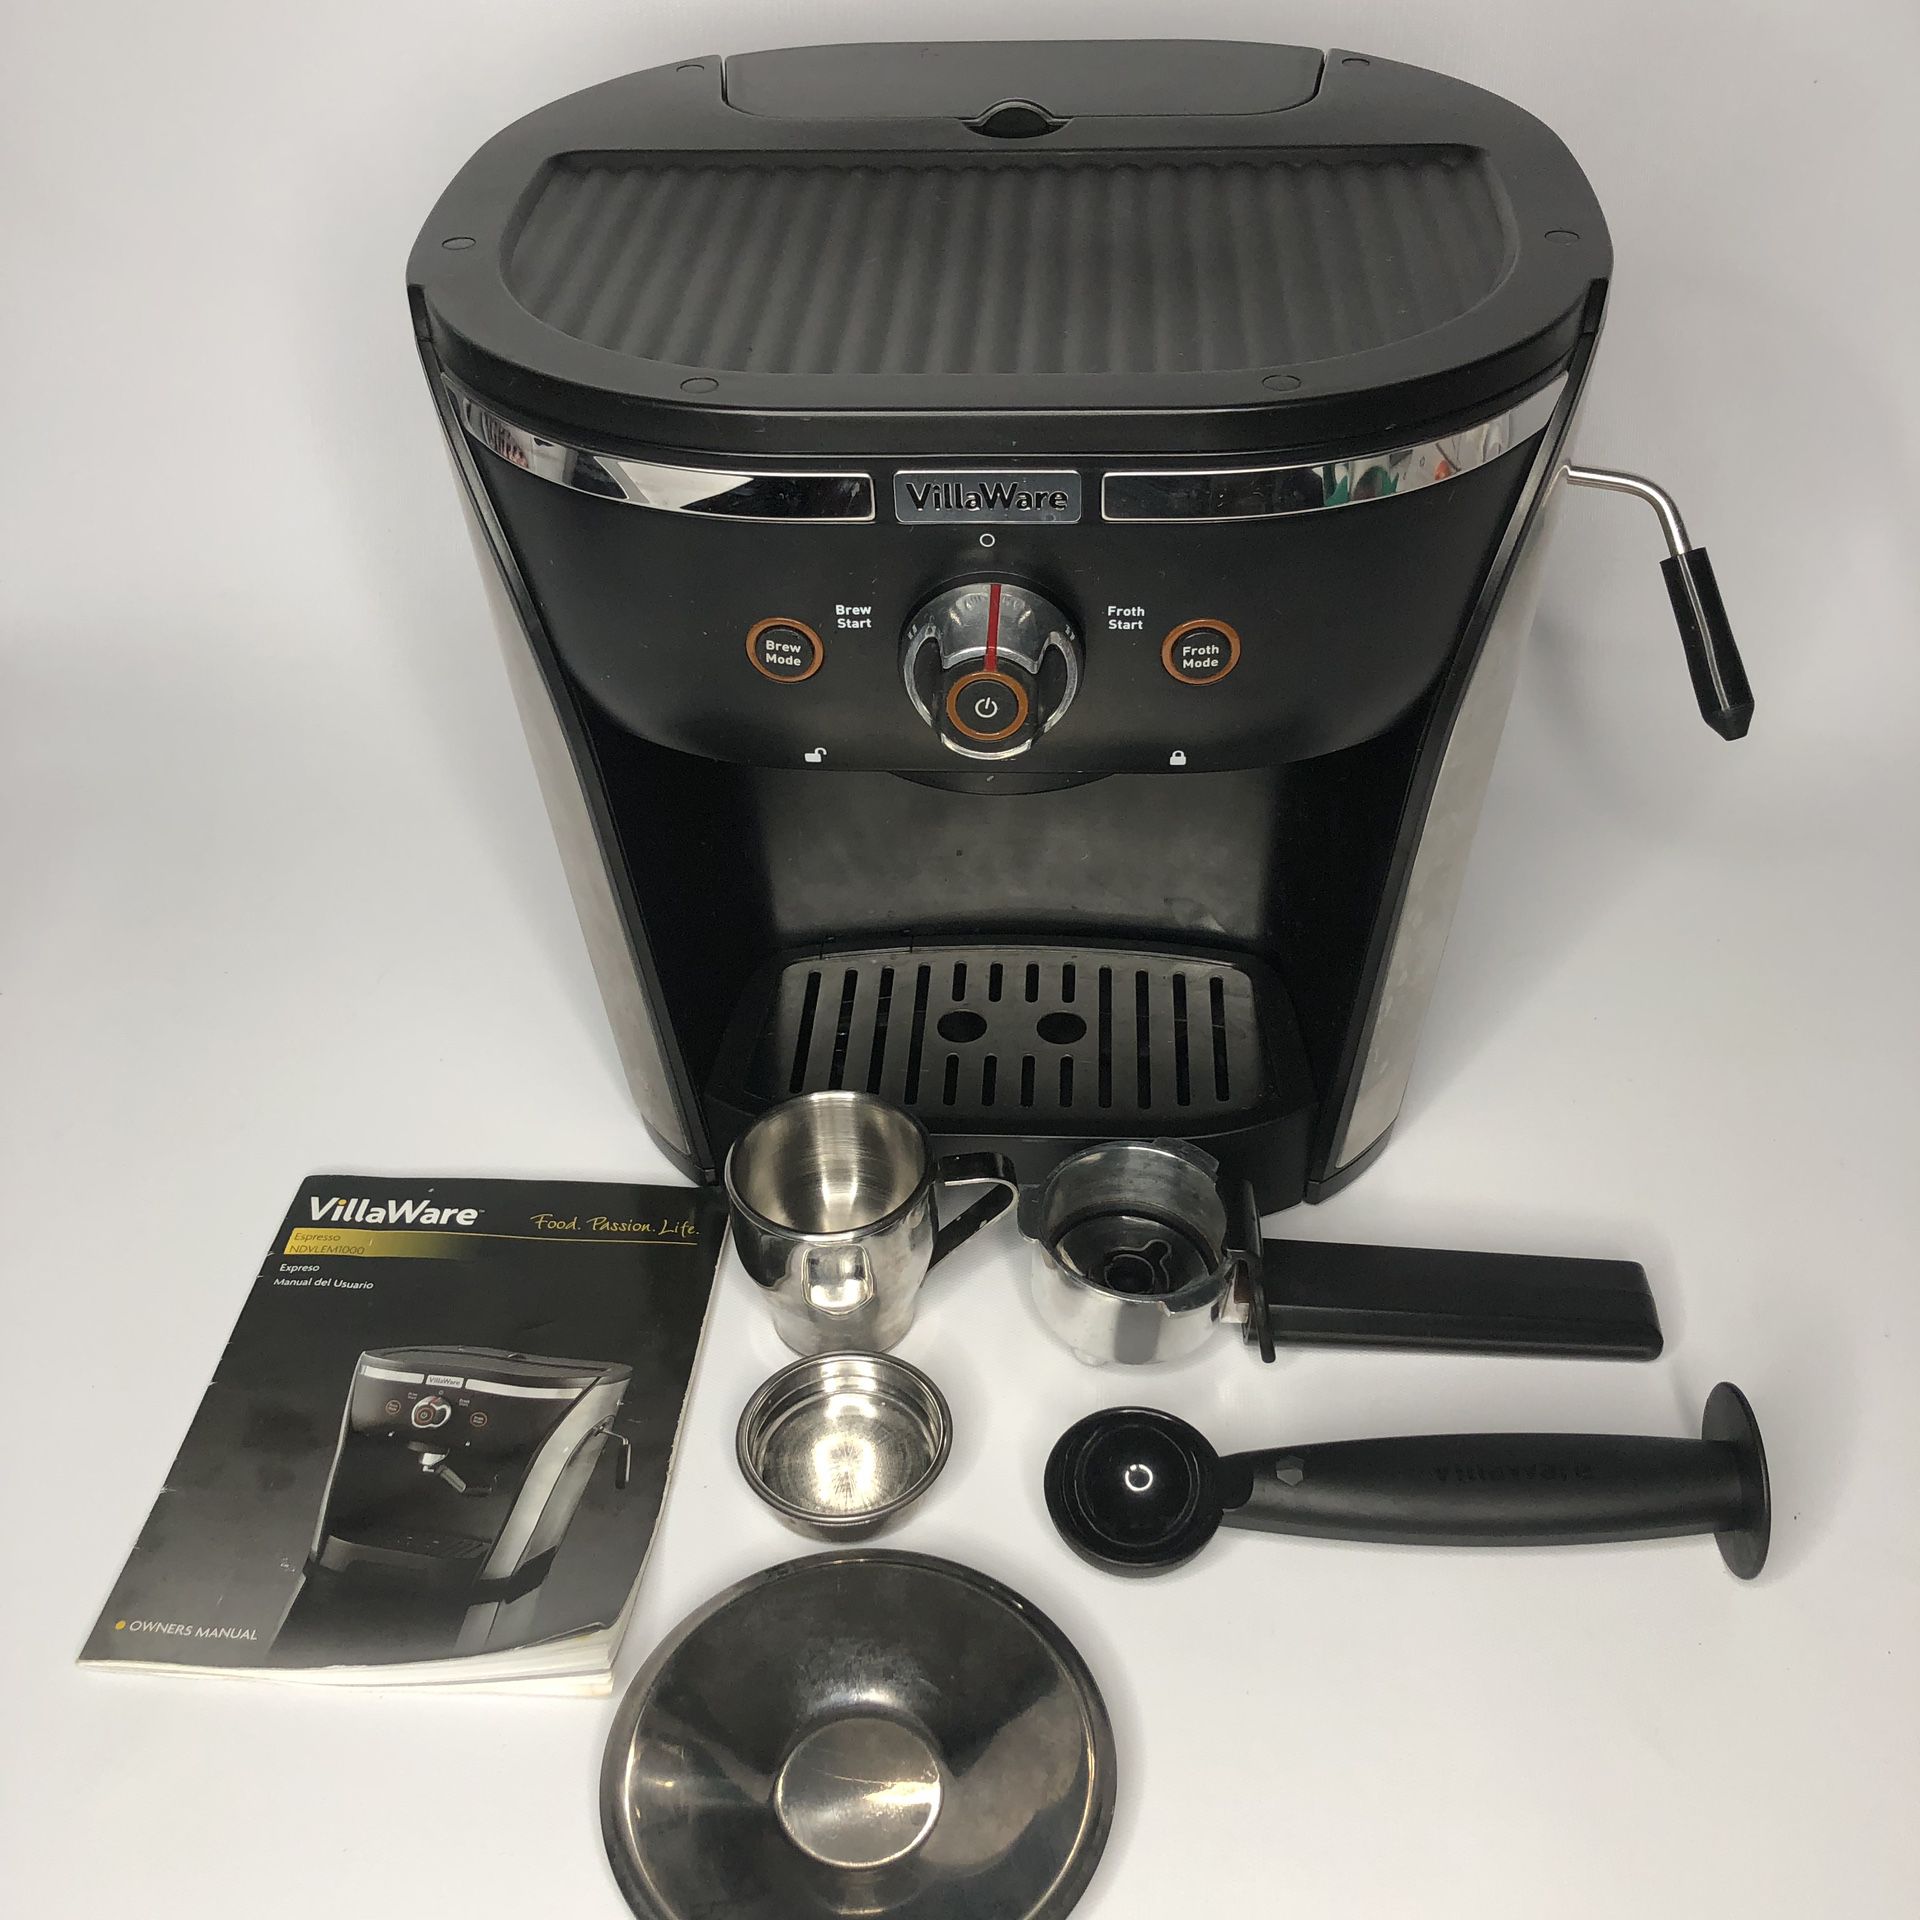 VillaWare Pump Espresso Maker NDVLEM1000 Home Espresso/Cappuchino Tested